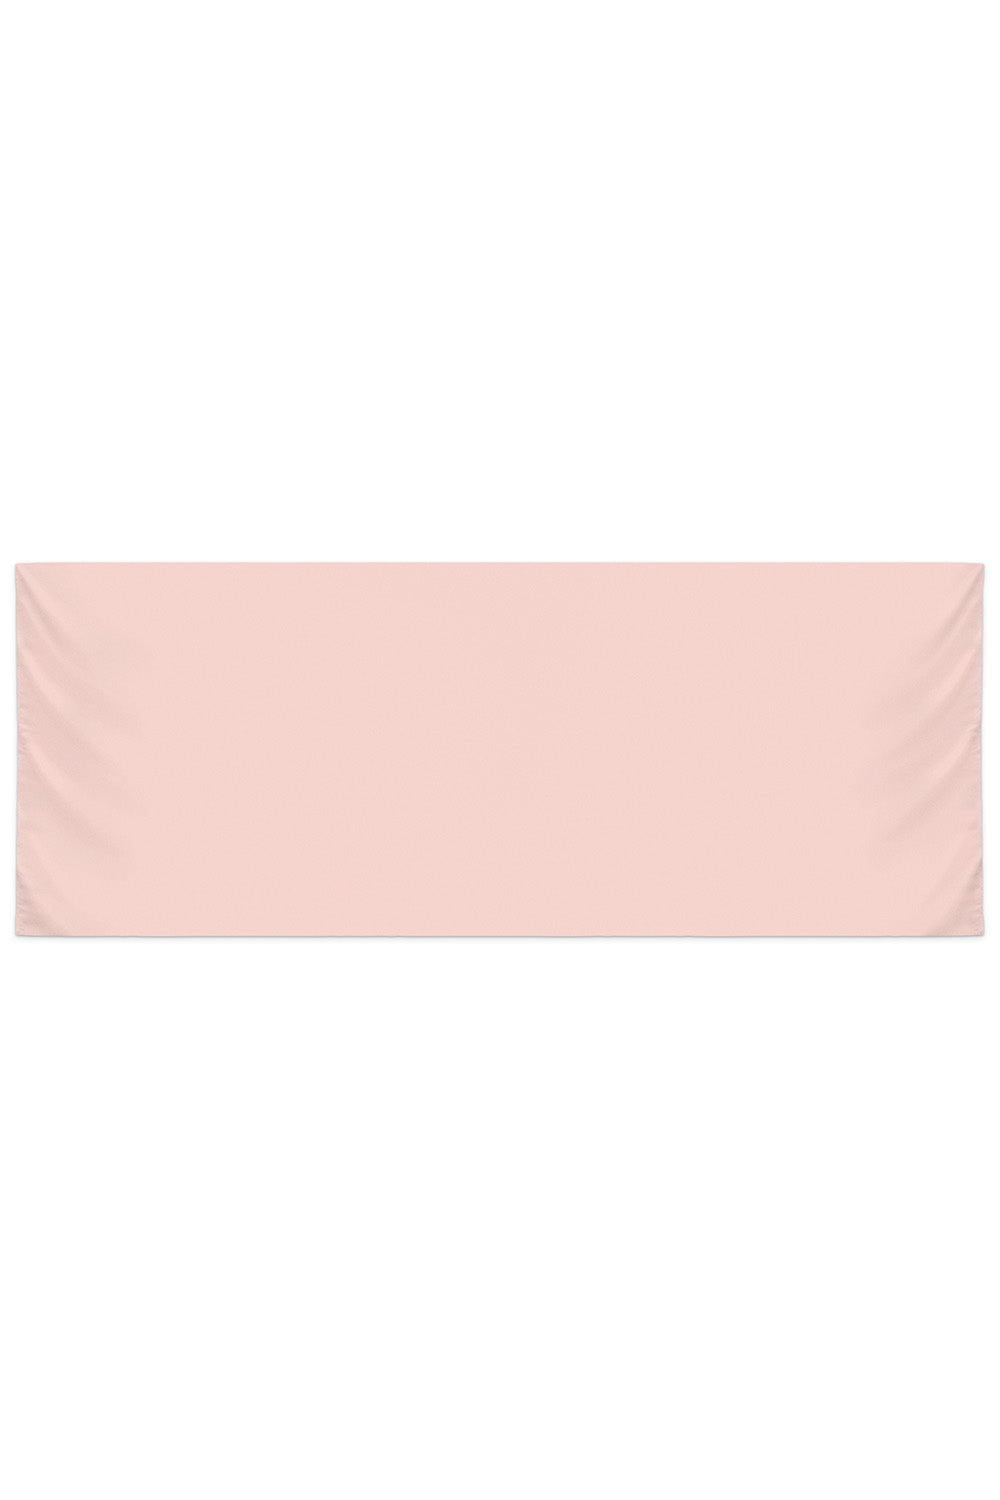 RR BASIC Chiffon Shawl in Pale Pink